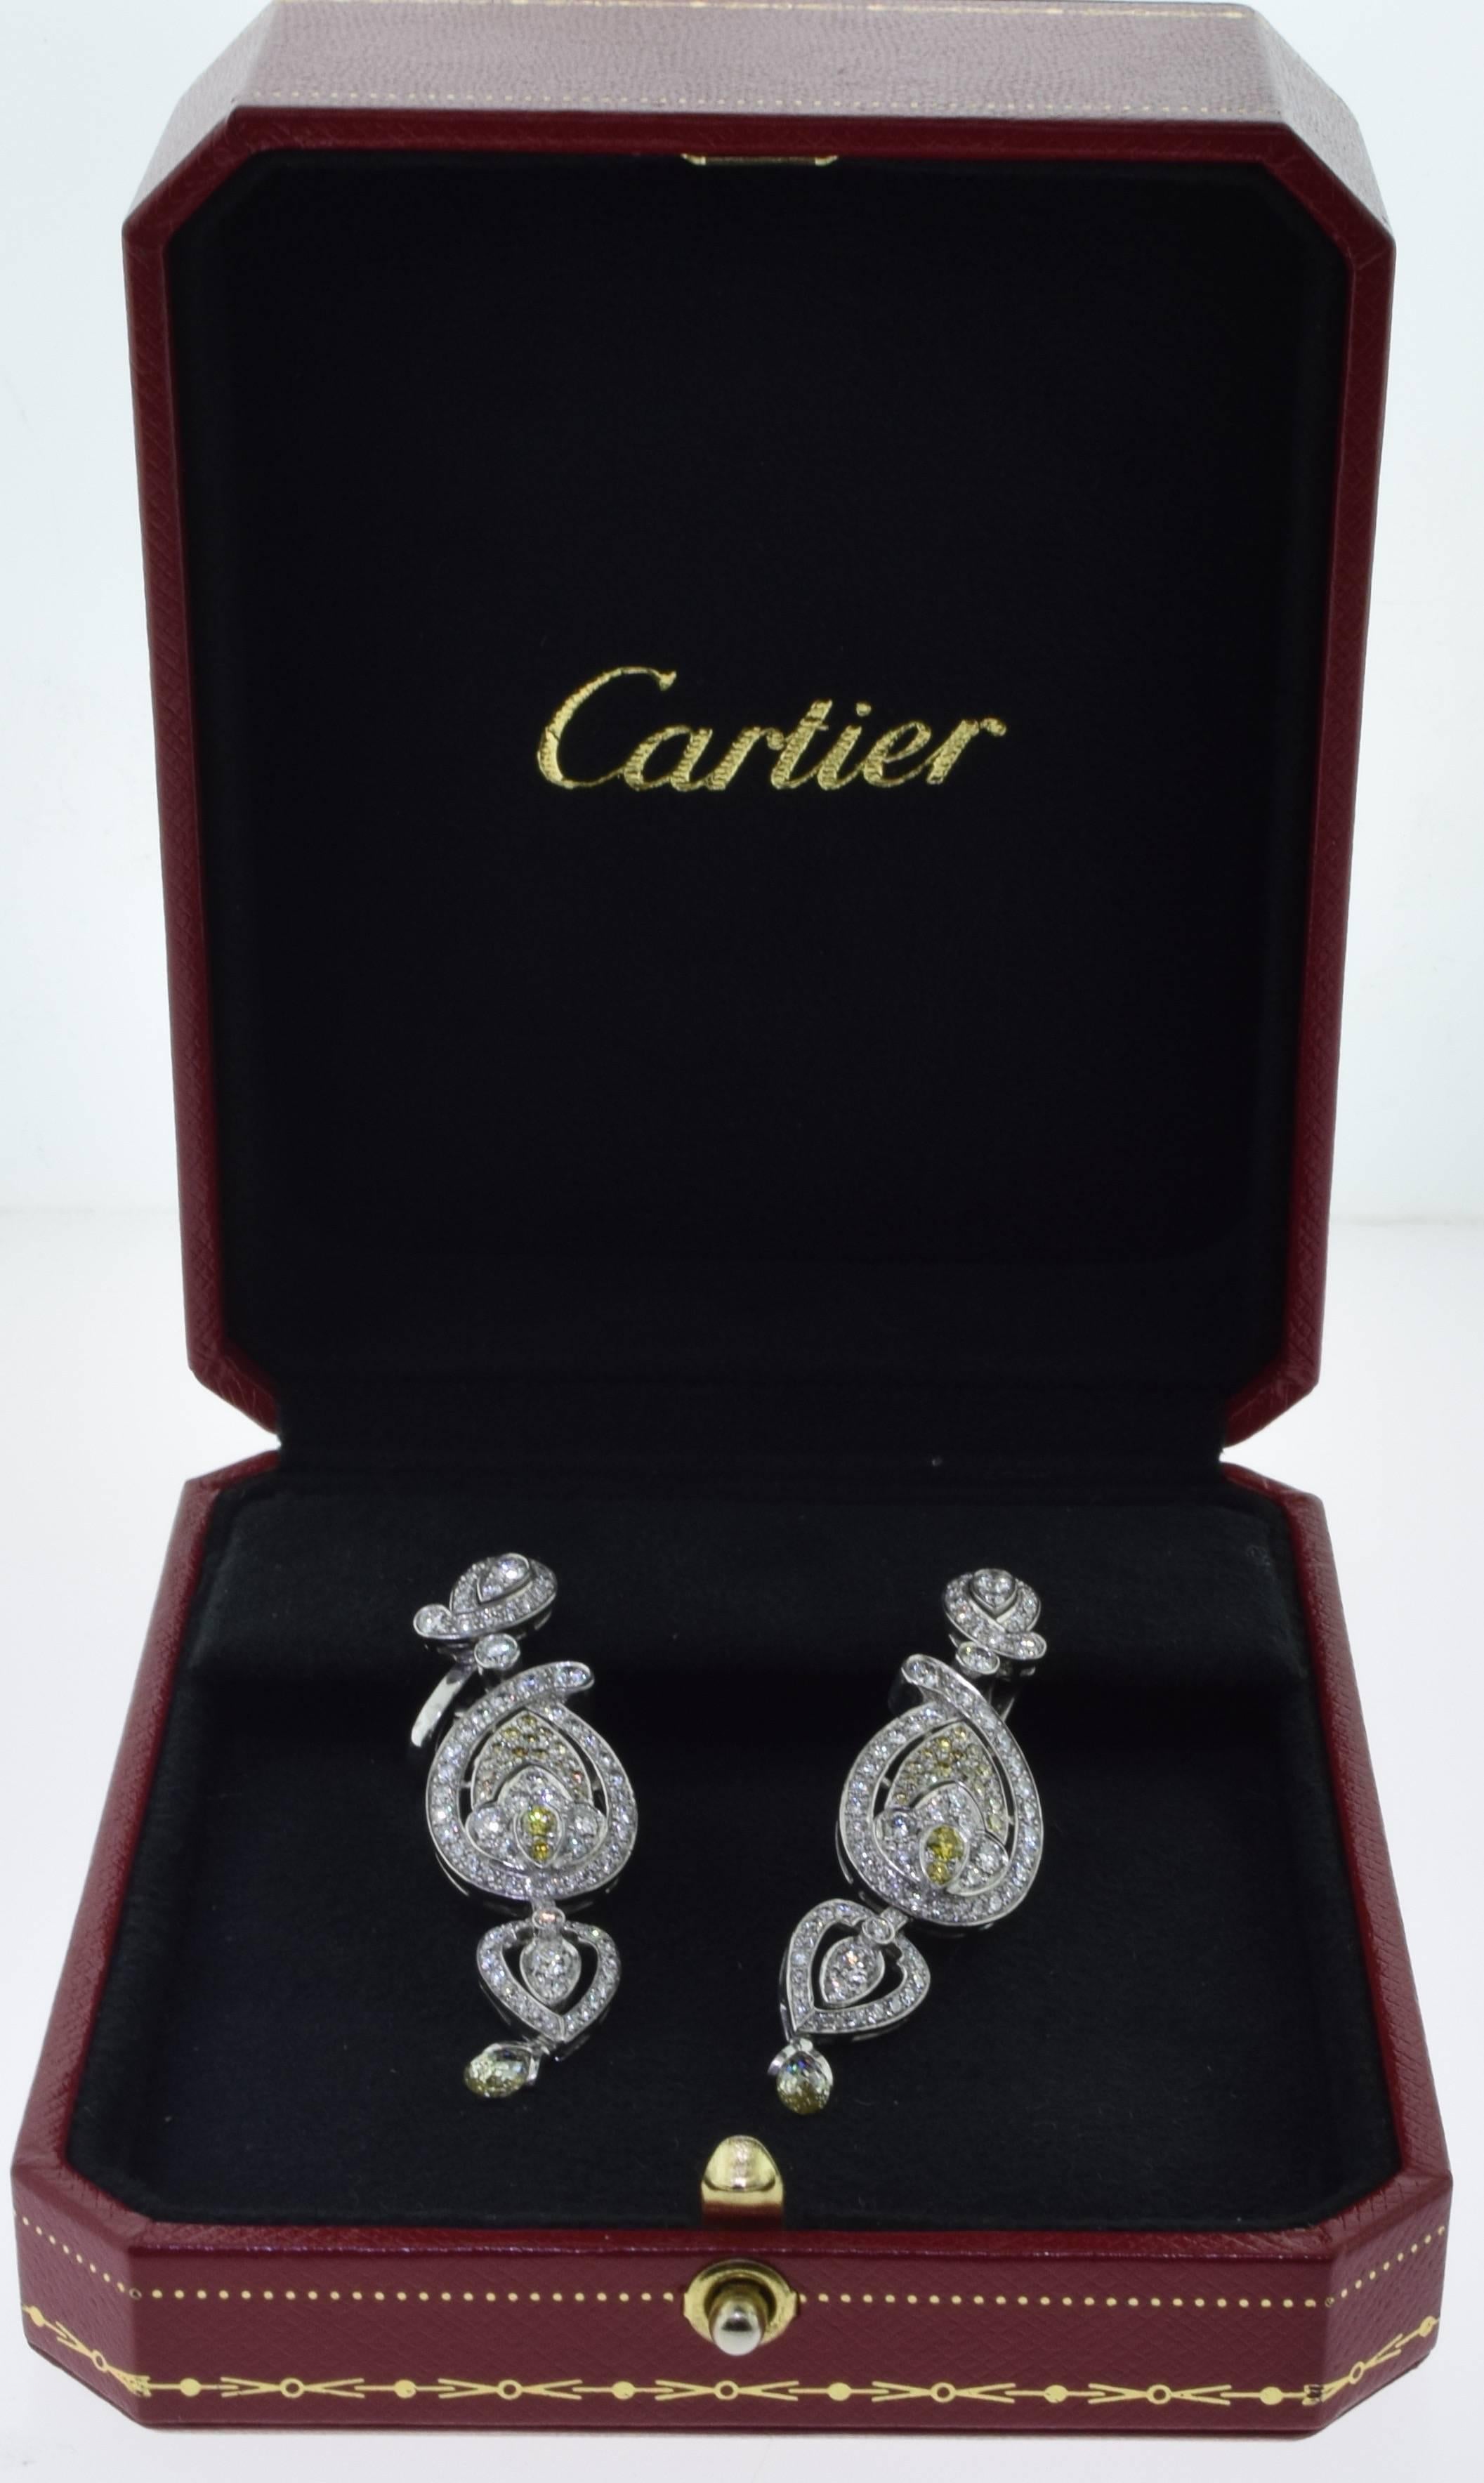 DESIGNER: Cartier
METAL: Platinum
STONES: Yellow and White Diamonds
TOTAL CARAT WEIGHT: 10 carat
TOTAL ITEM WEIGHT (grams): 25.85
LENGTH: 2.05"

SIGNATURE / HALLMARK: Cartier, Serial Number Pt950

INCLUDES: Cartier Service Paperwork
